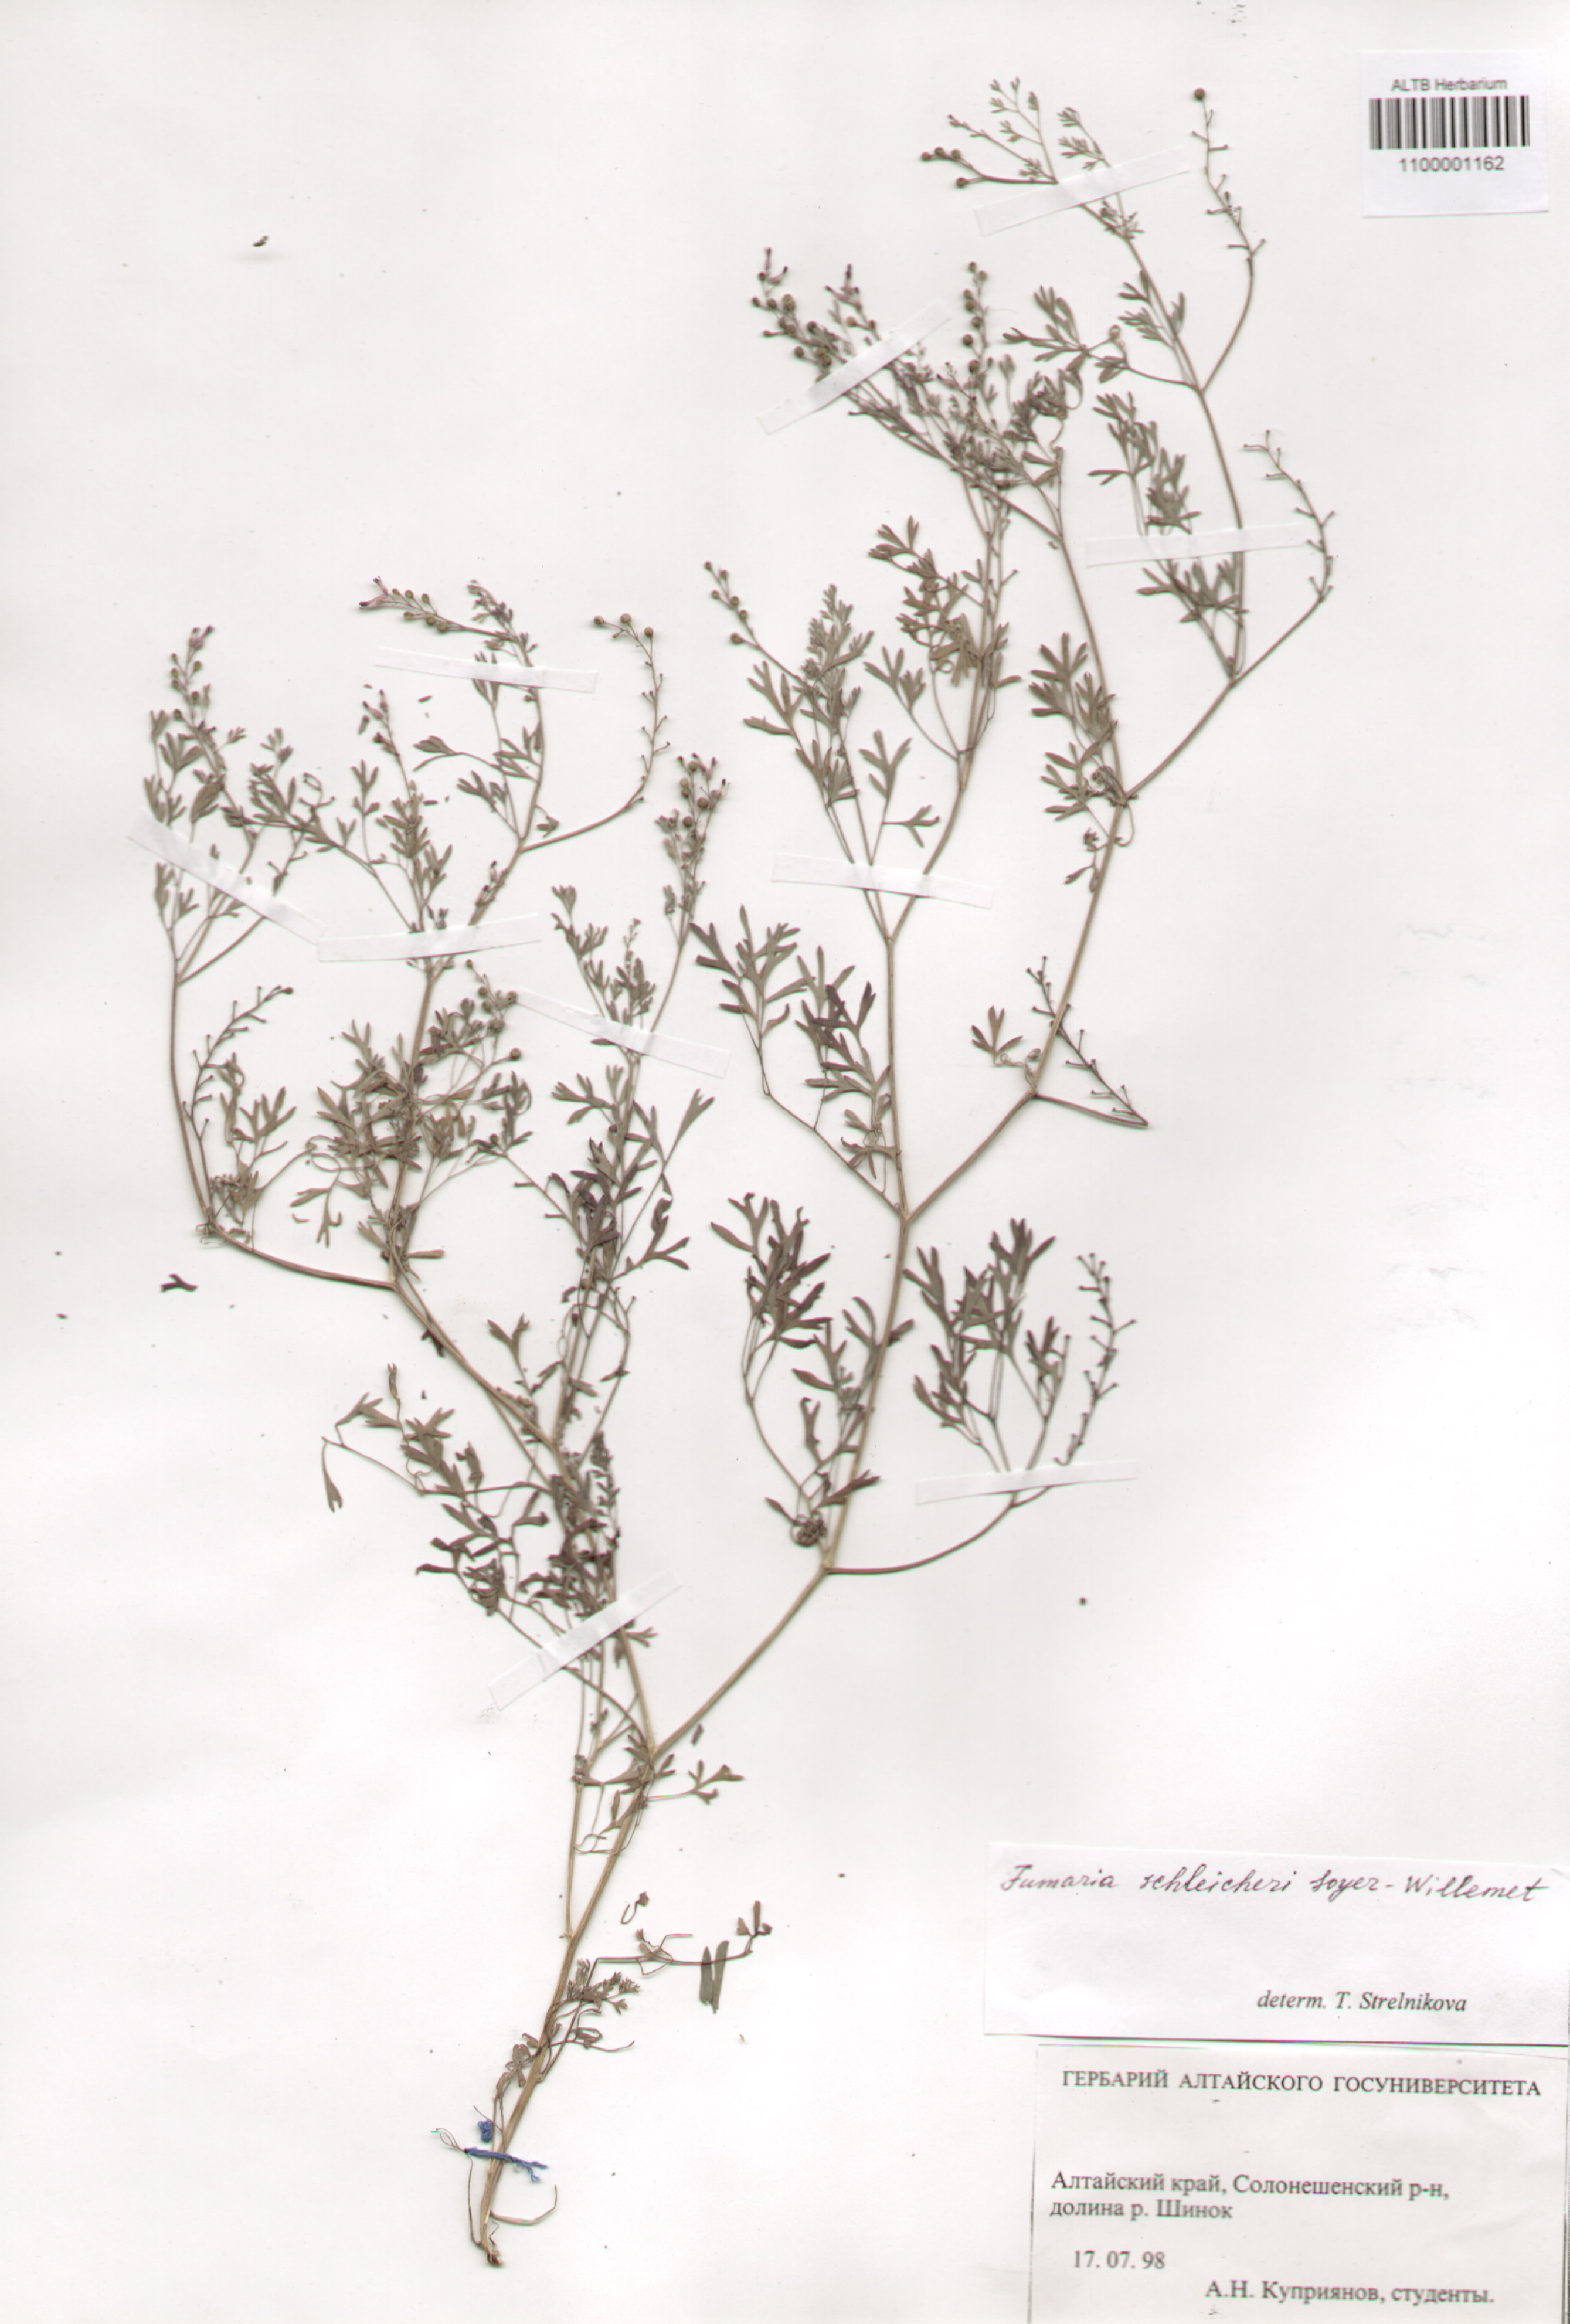 Papaveraceae,Fumaria schleicheri Soy.-Will.